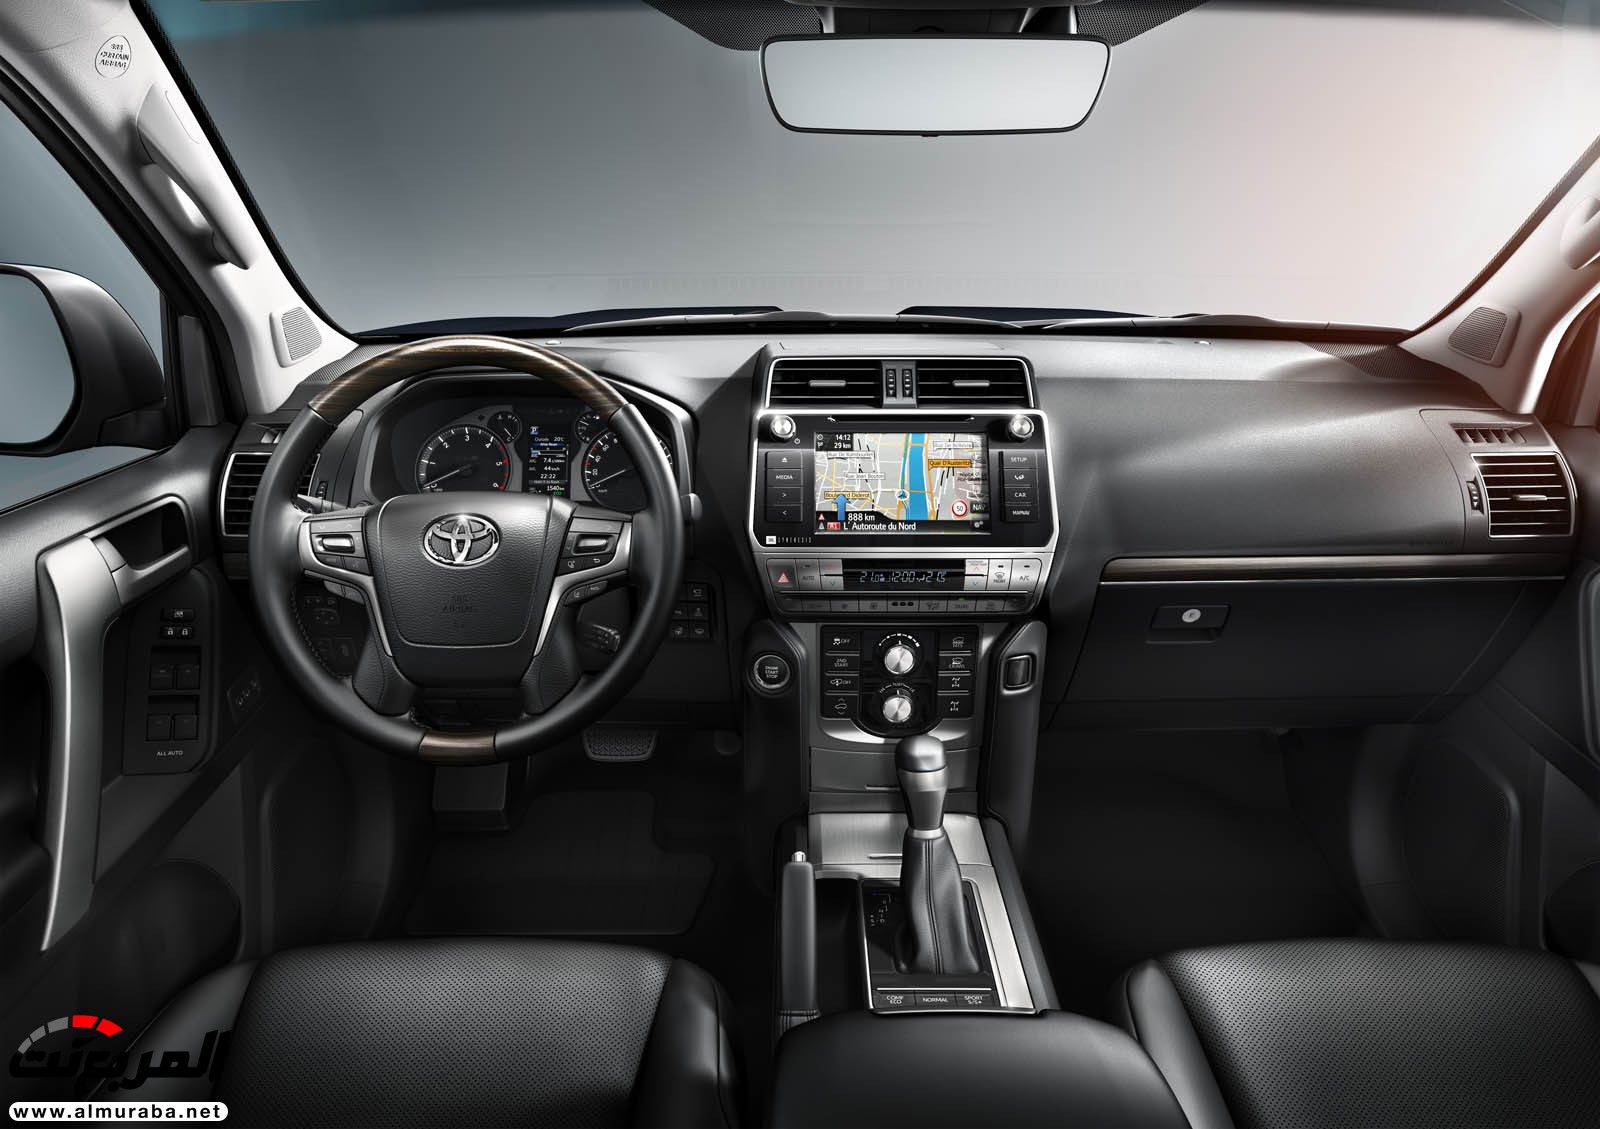 تويوتا برادو 2018 الشكل الجديد تدشن نفسها رسمياً "تقرير وفيديو واسعار" Toyota Prado 3